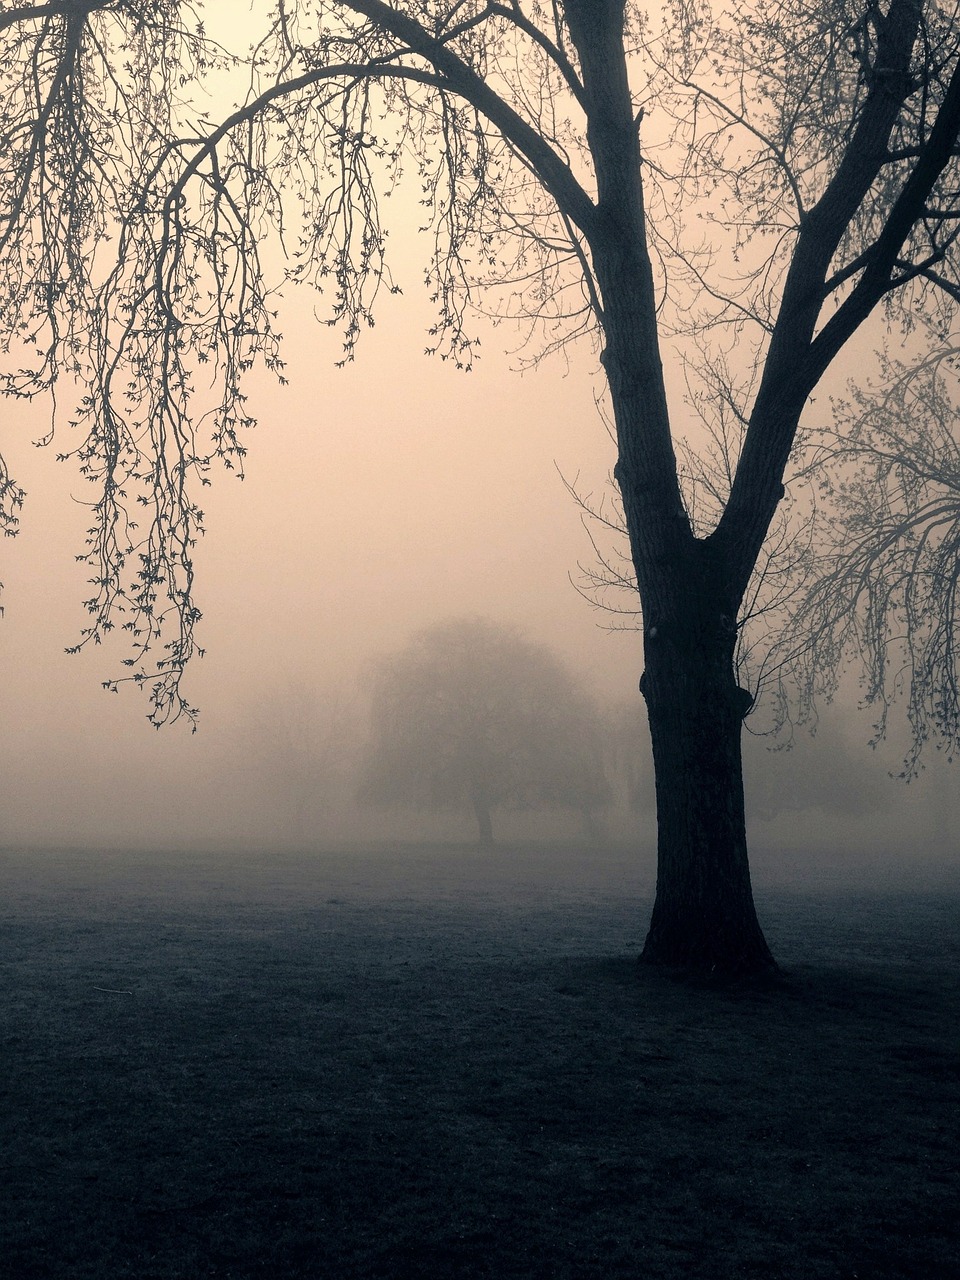 https://pixabay.com/en/trees-spooky-mist-park-nature-448554/